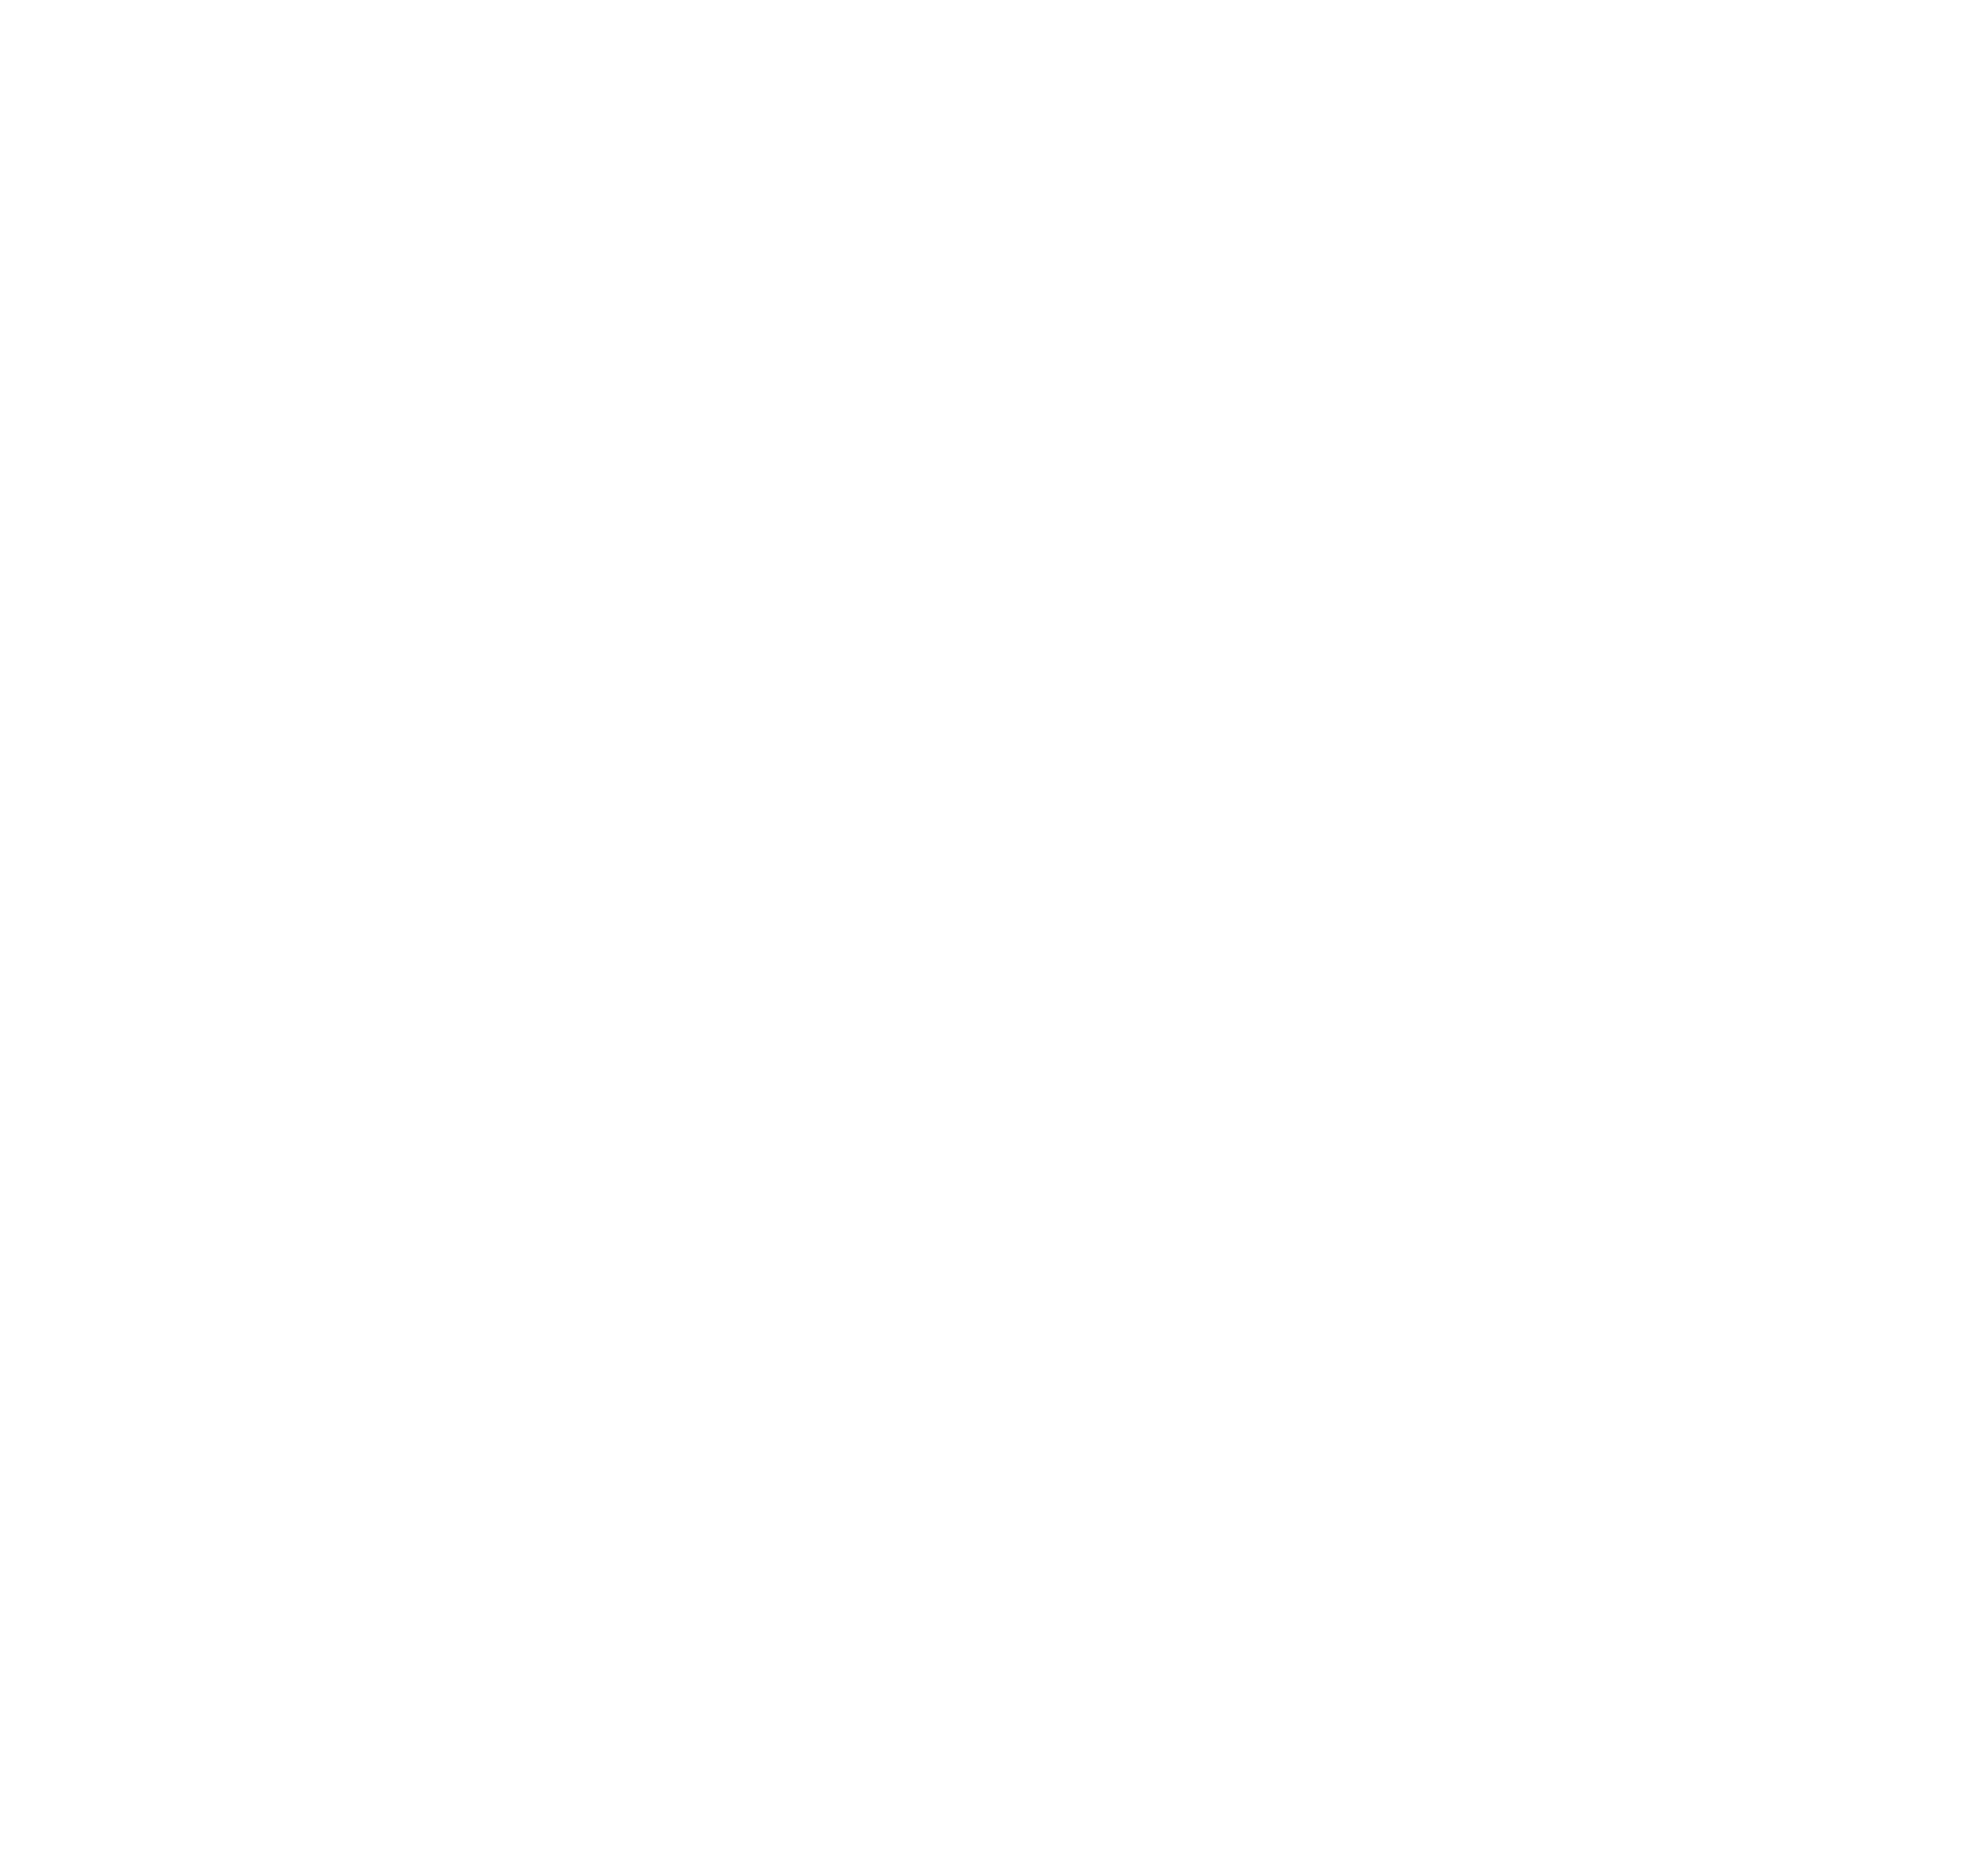 VisualJuice_Tavola disegno 1-04